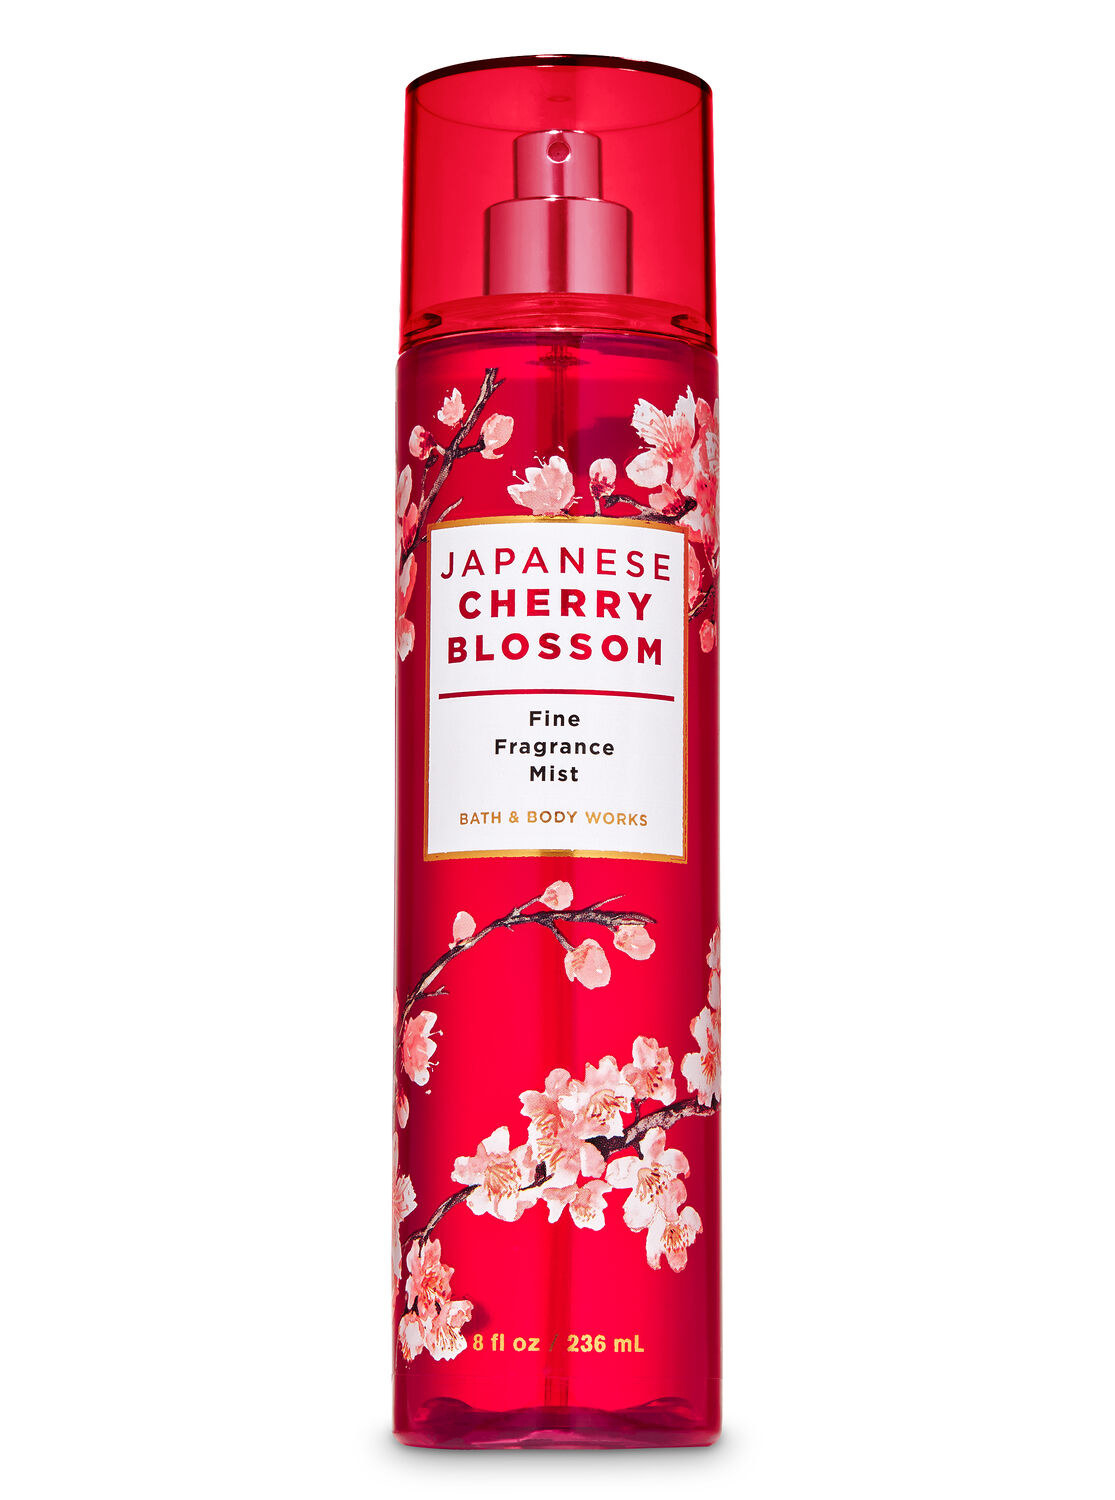 Bottle of Japanese Cherry Blossom perfume by Bath &amp;amp; Body Works